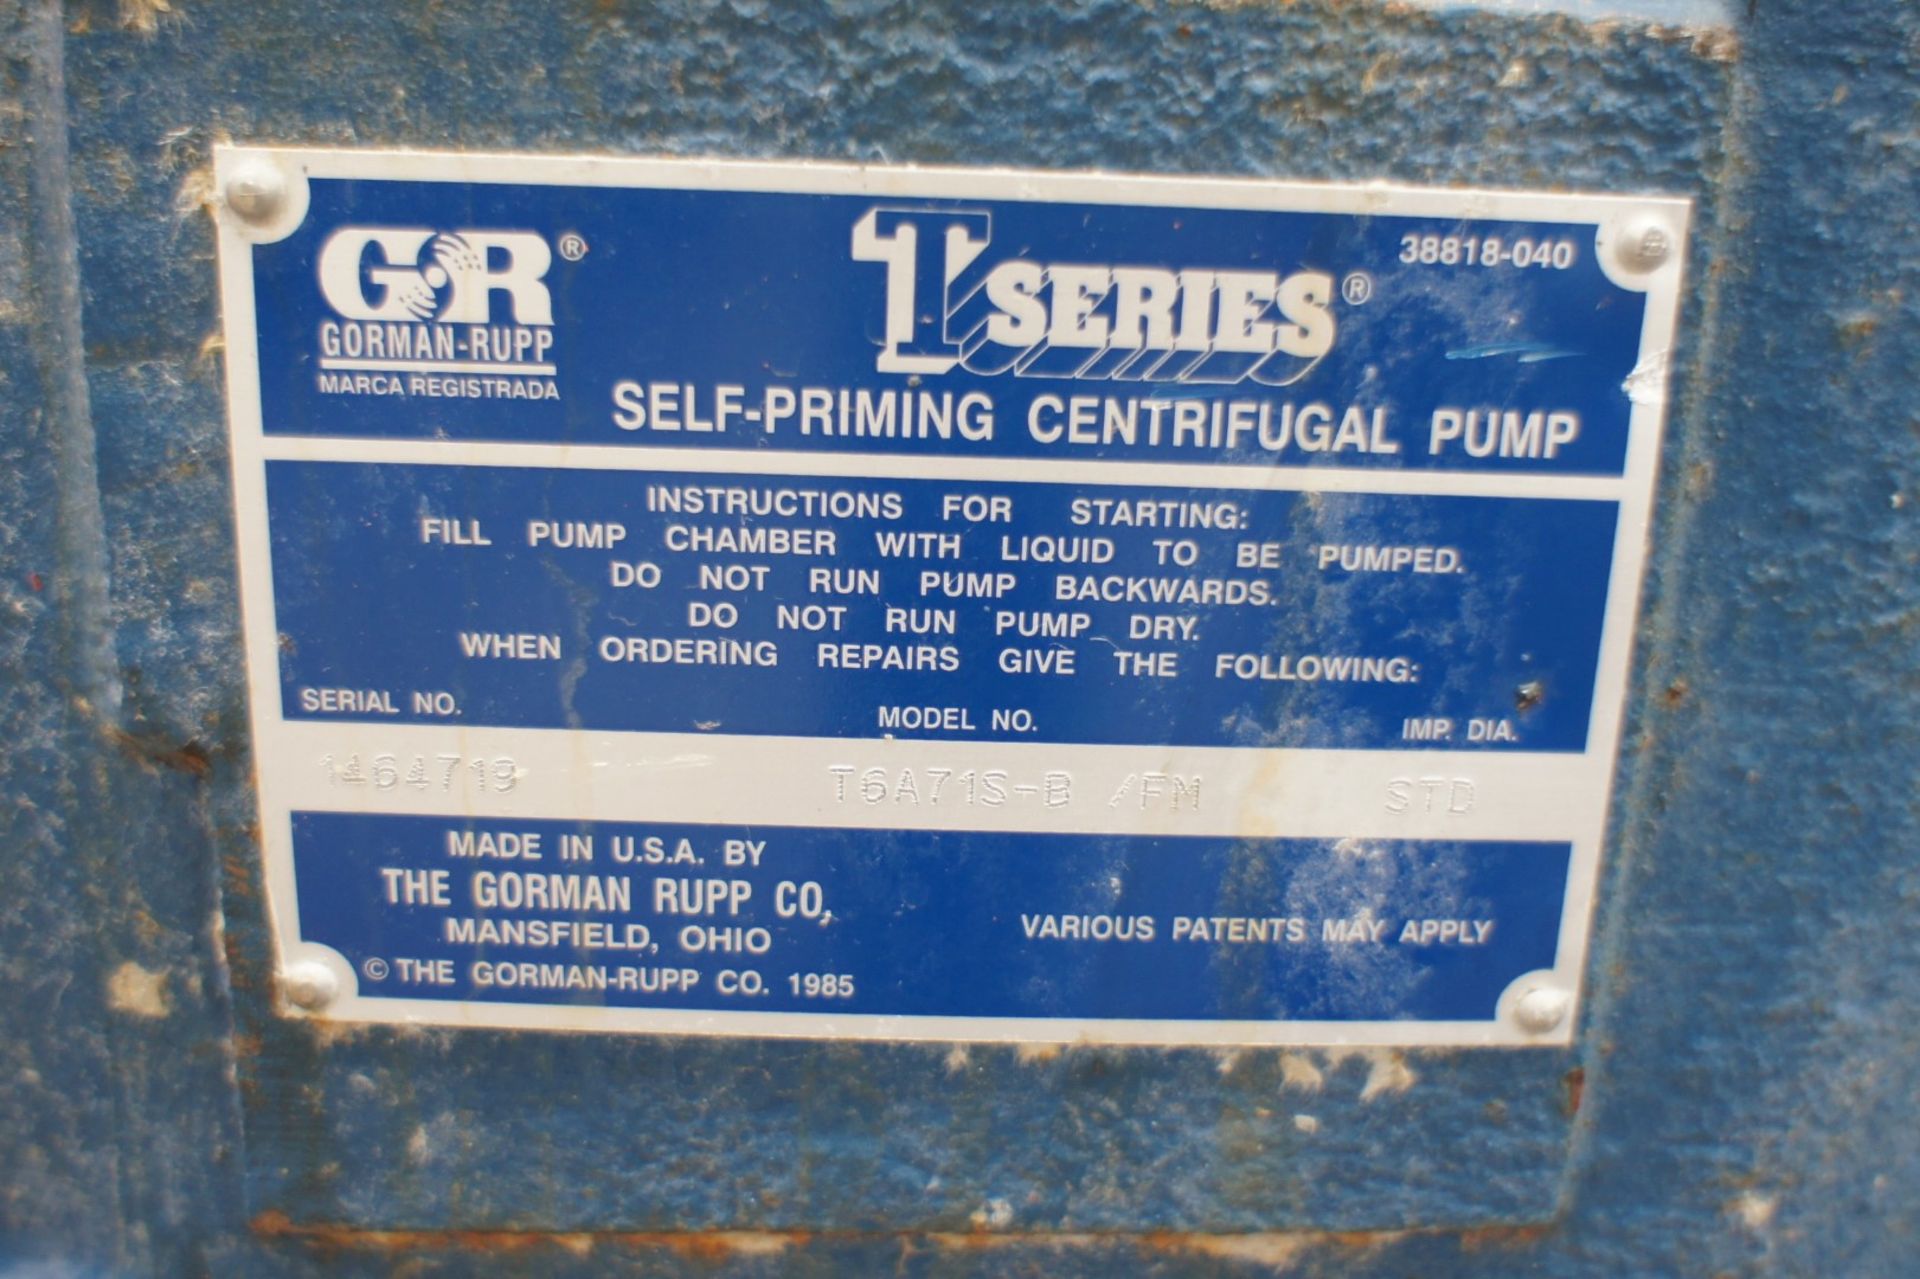 * Gormann Rupp 'T' Series self-priming centrifugal pump, T6A715-B/FM - Image 3 of 3